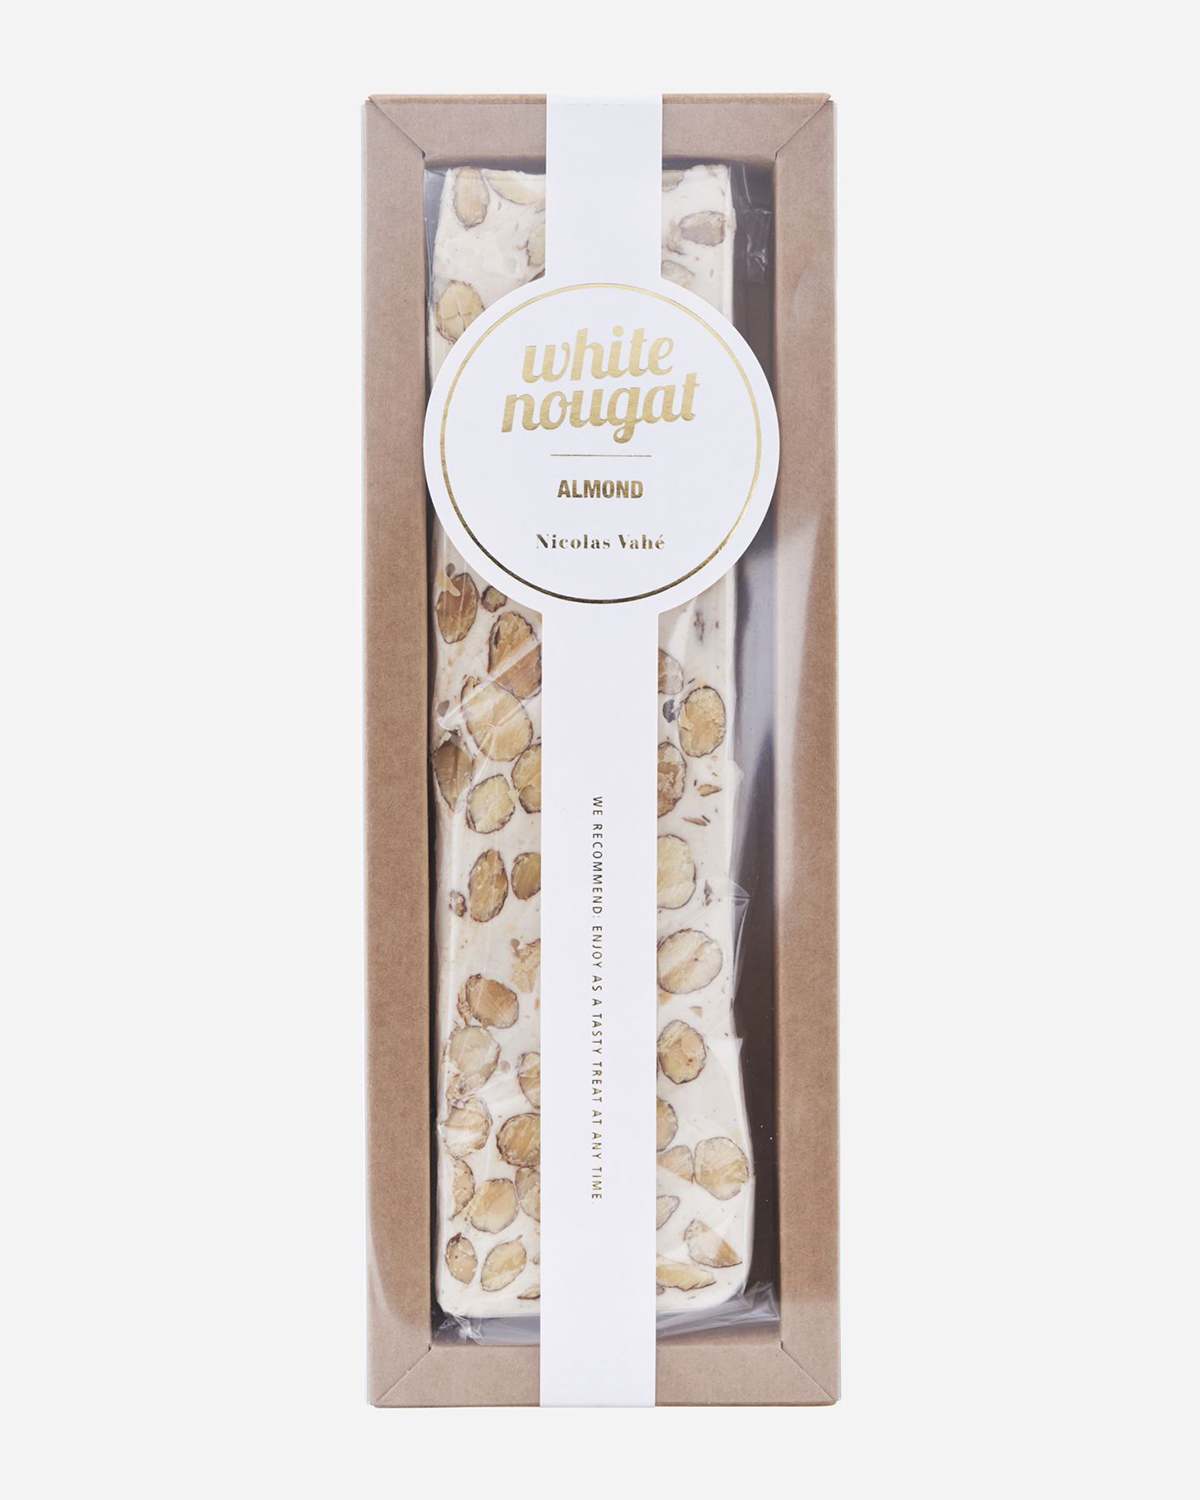 White Nougat - Almonds, 180 g.